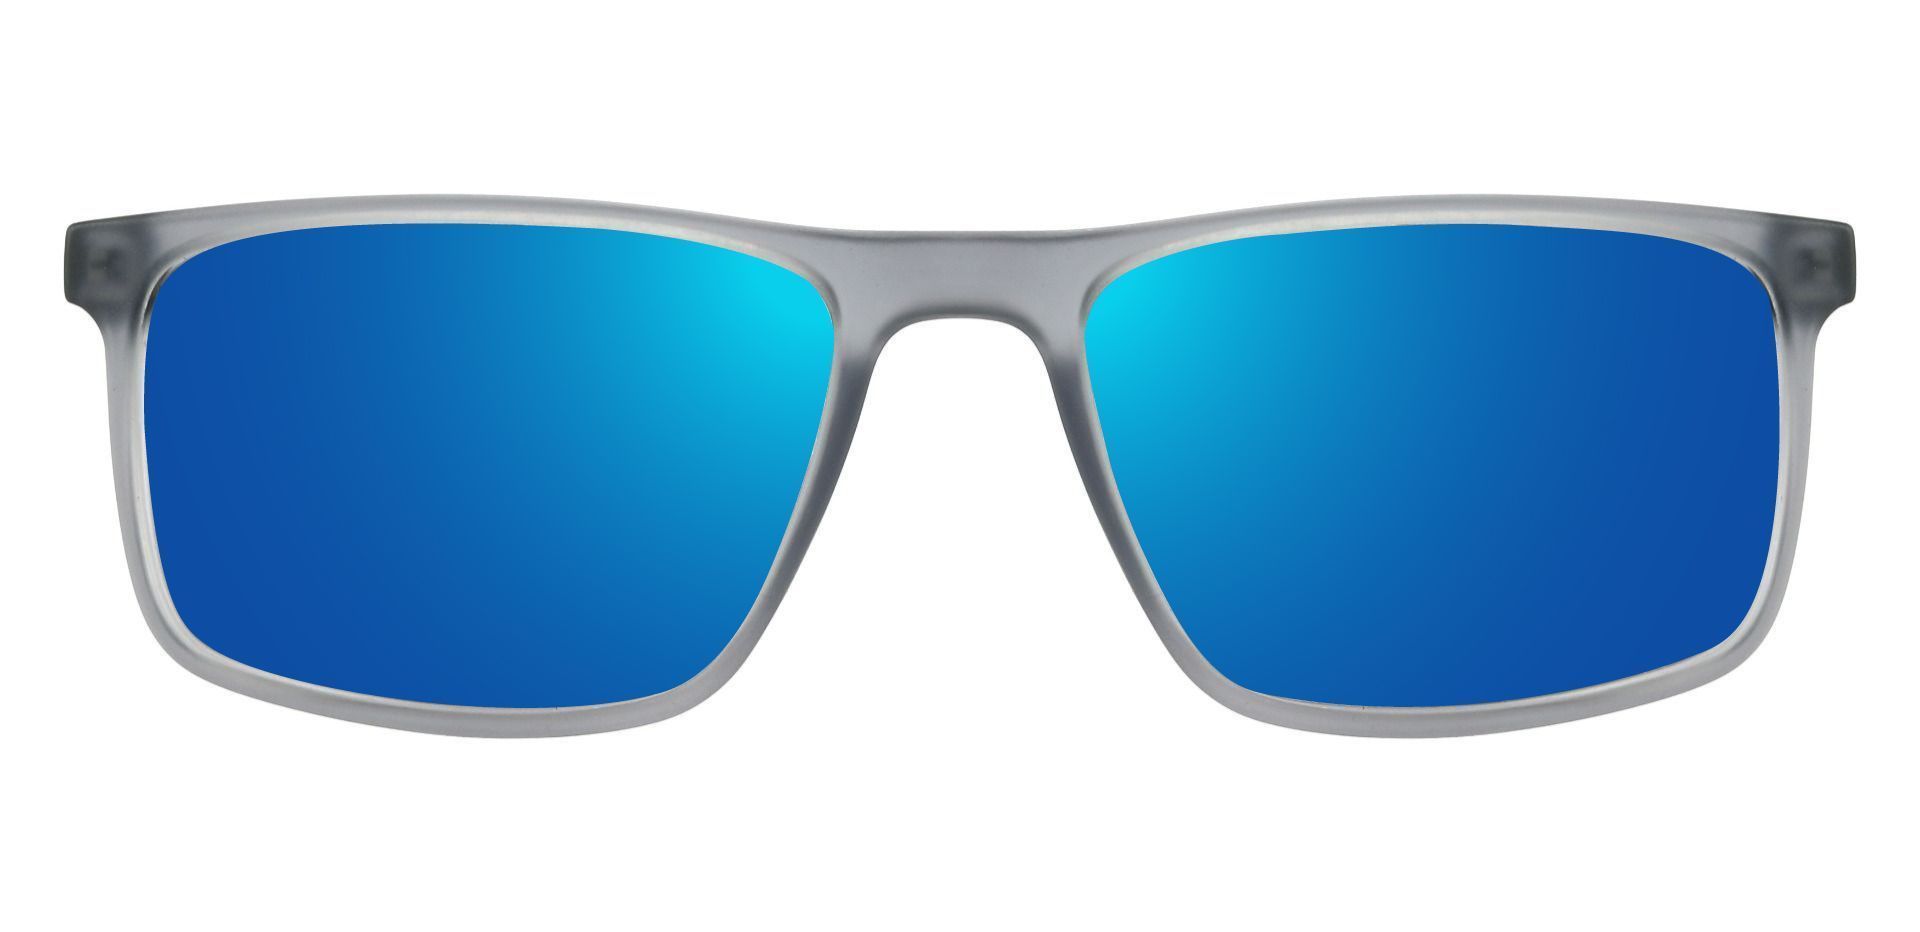 Sam Rectangle Non-Rx Sunglasses - Gray Frame with Mirror Blue